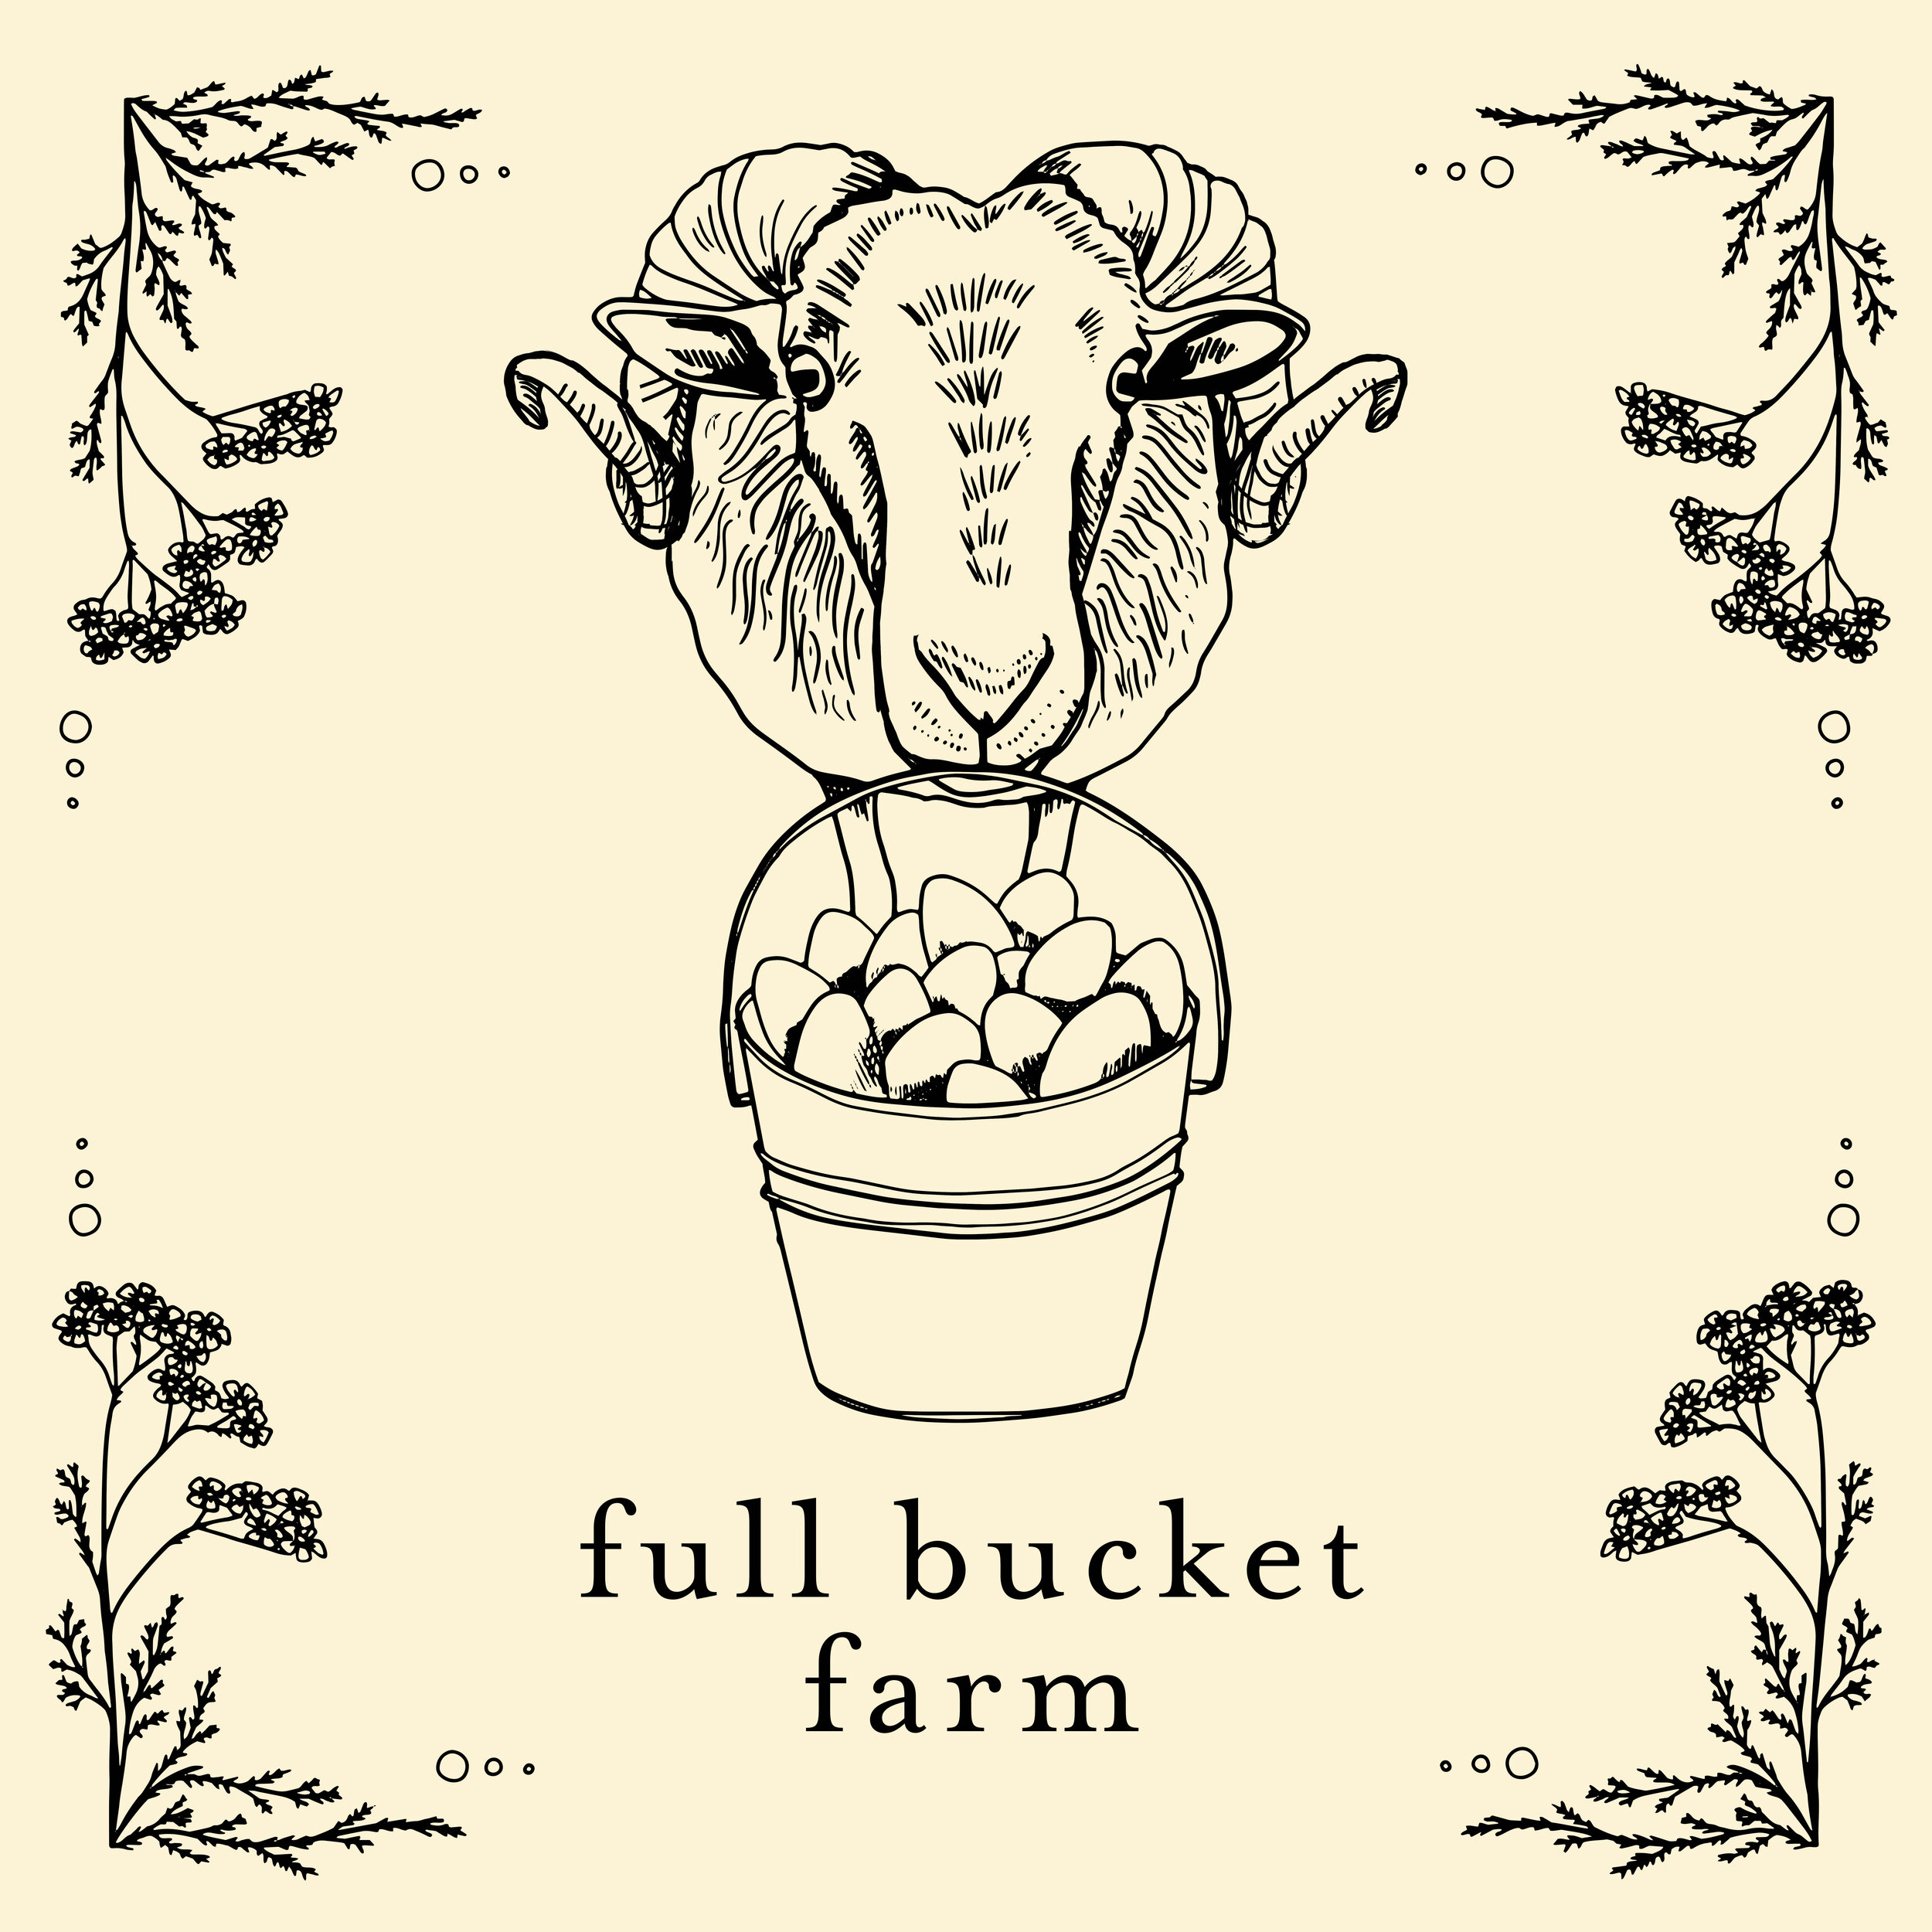 full-bucket-farm-logo-ratbee-press-graphic-design-example.jpg